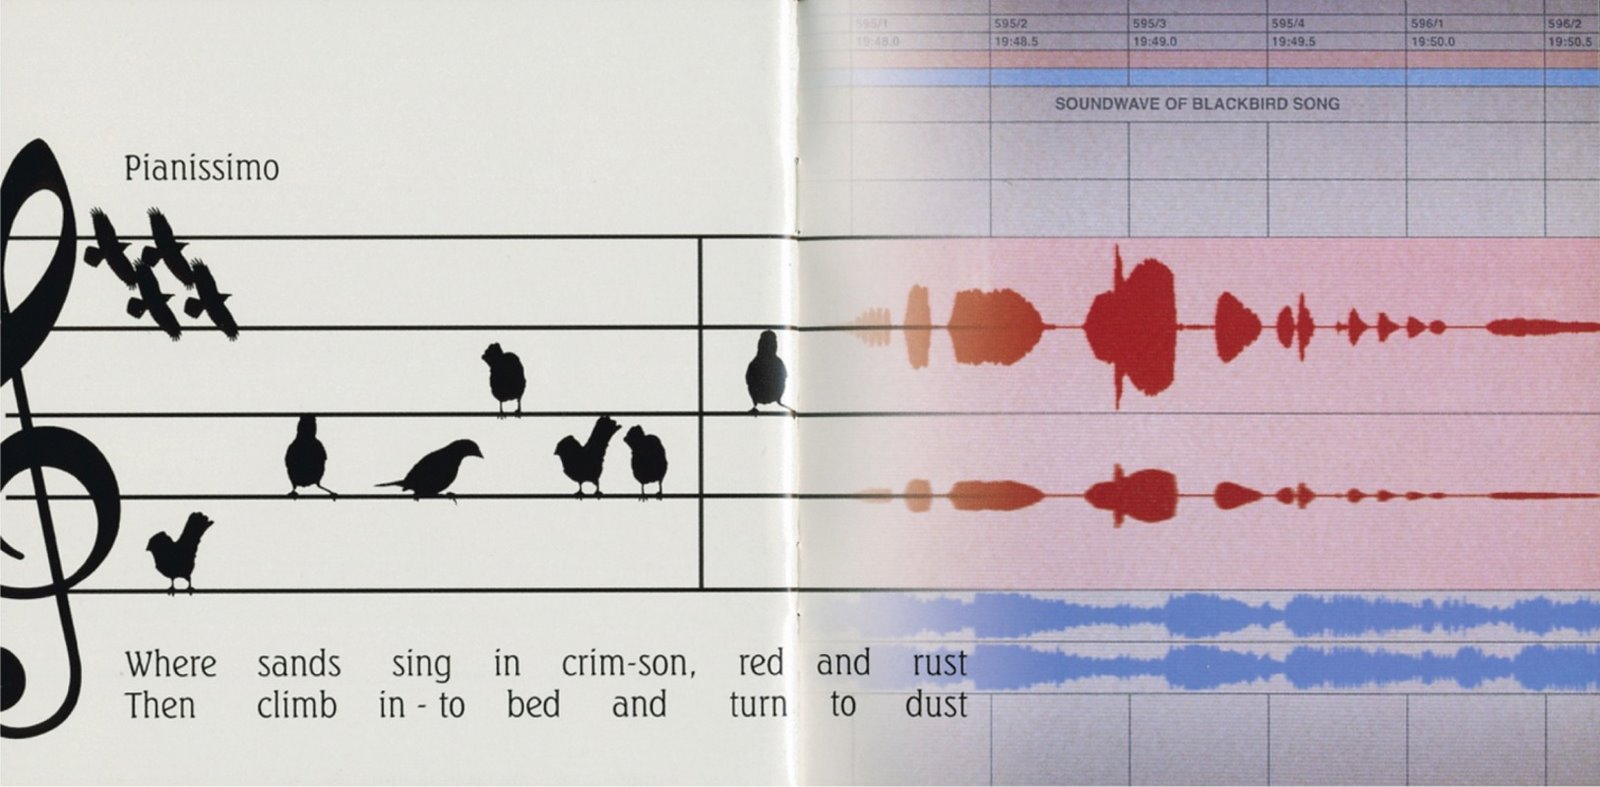 Kate Bush - Aerial Album Liner Note